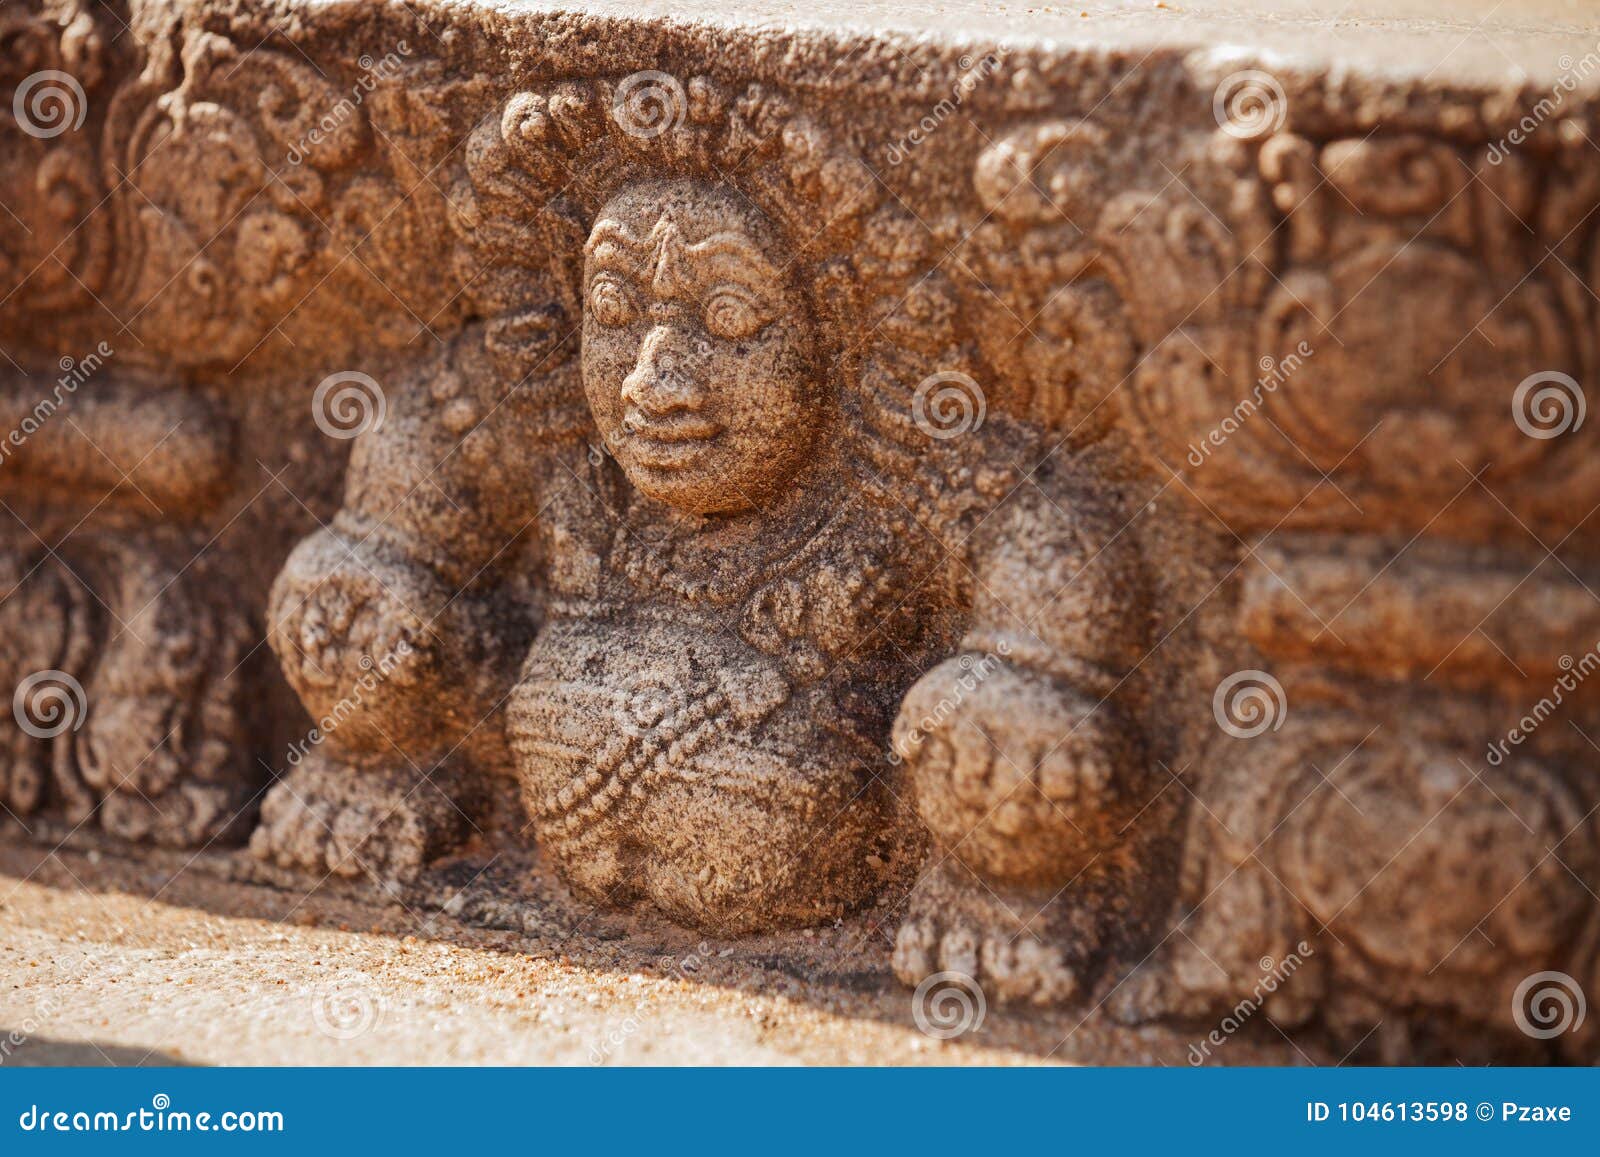 sri lanka, anuradhapura. mythological character on stone wall of